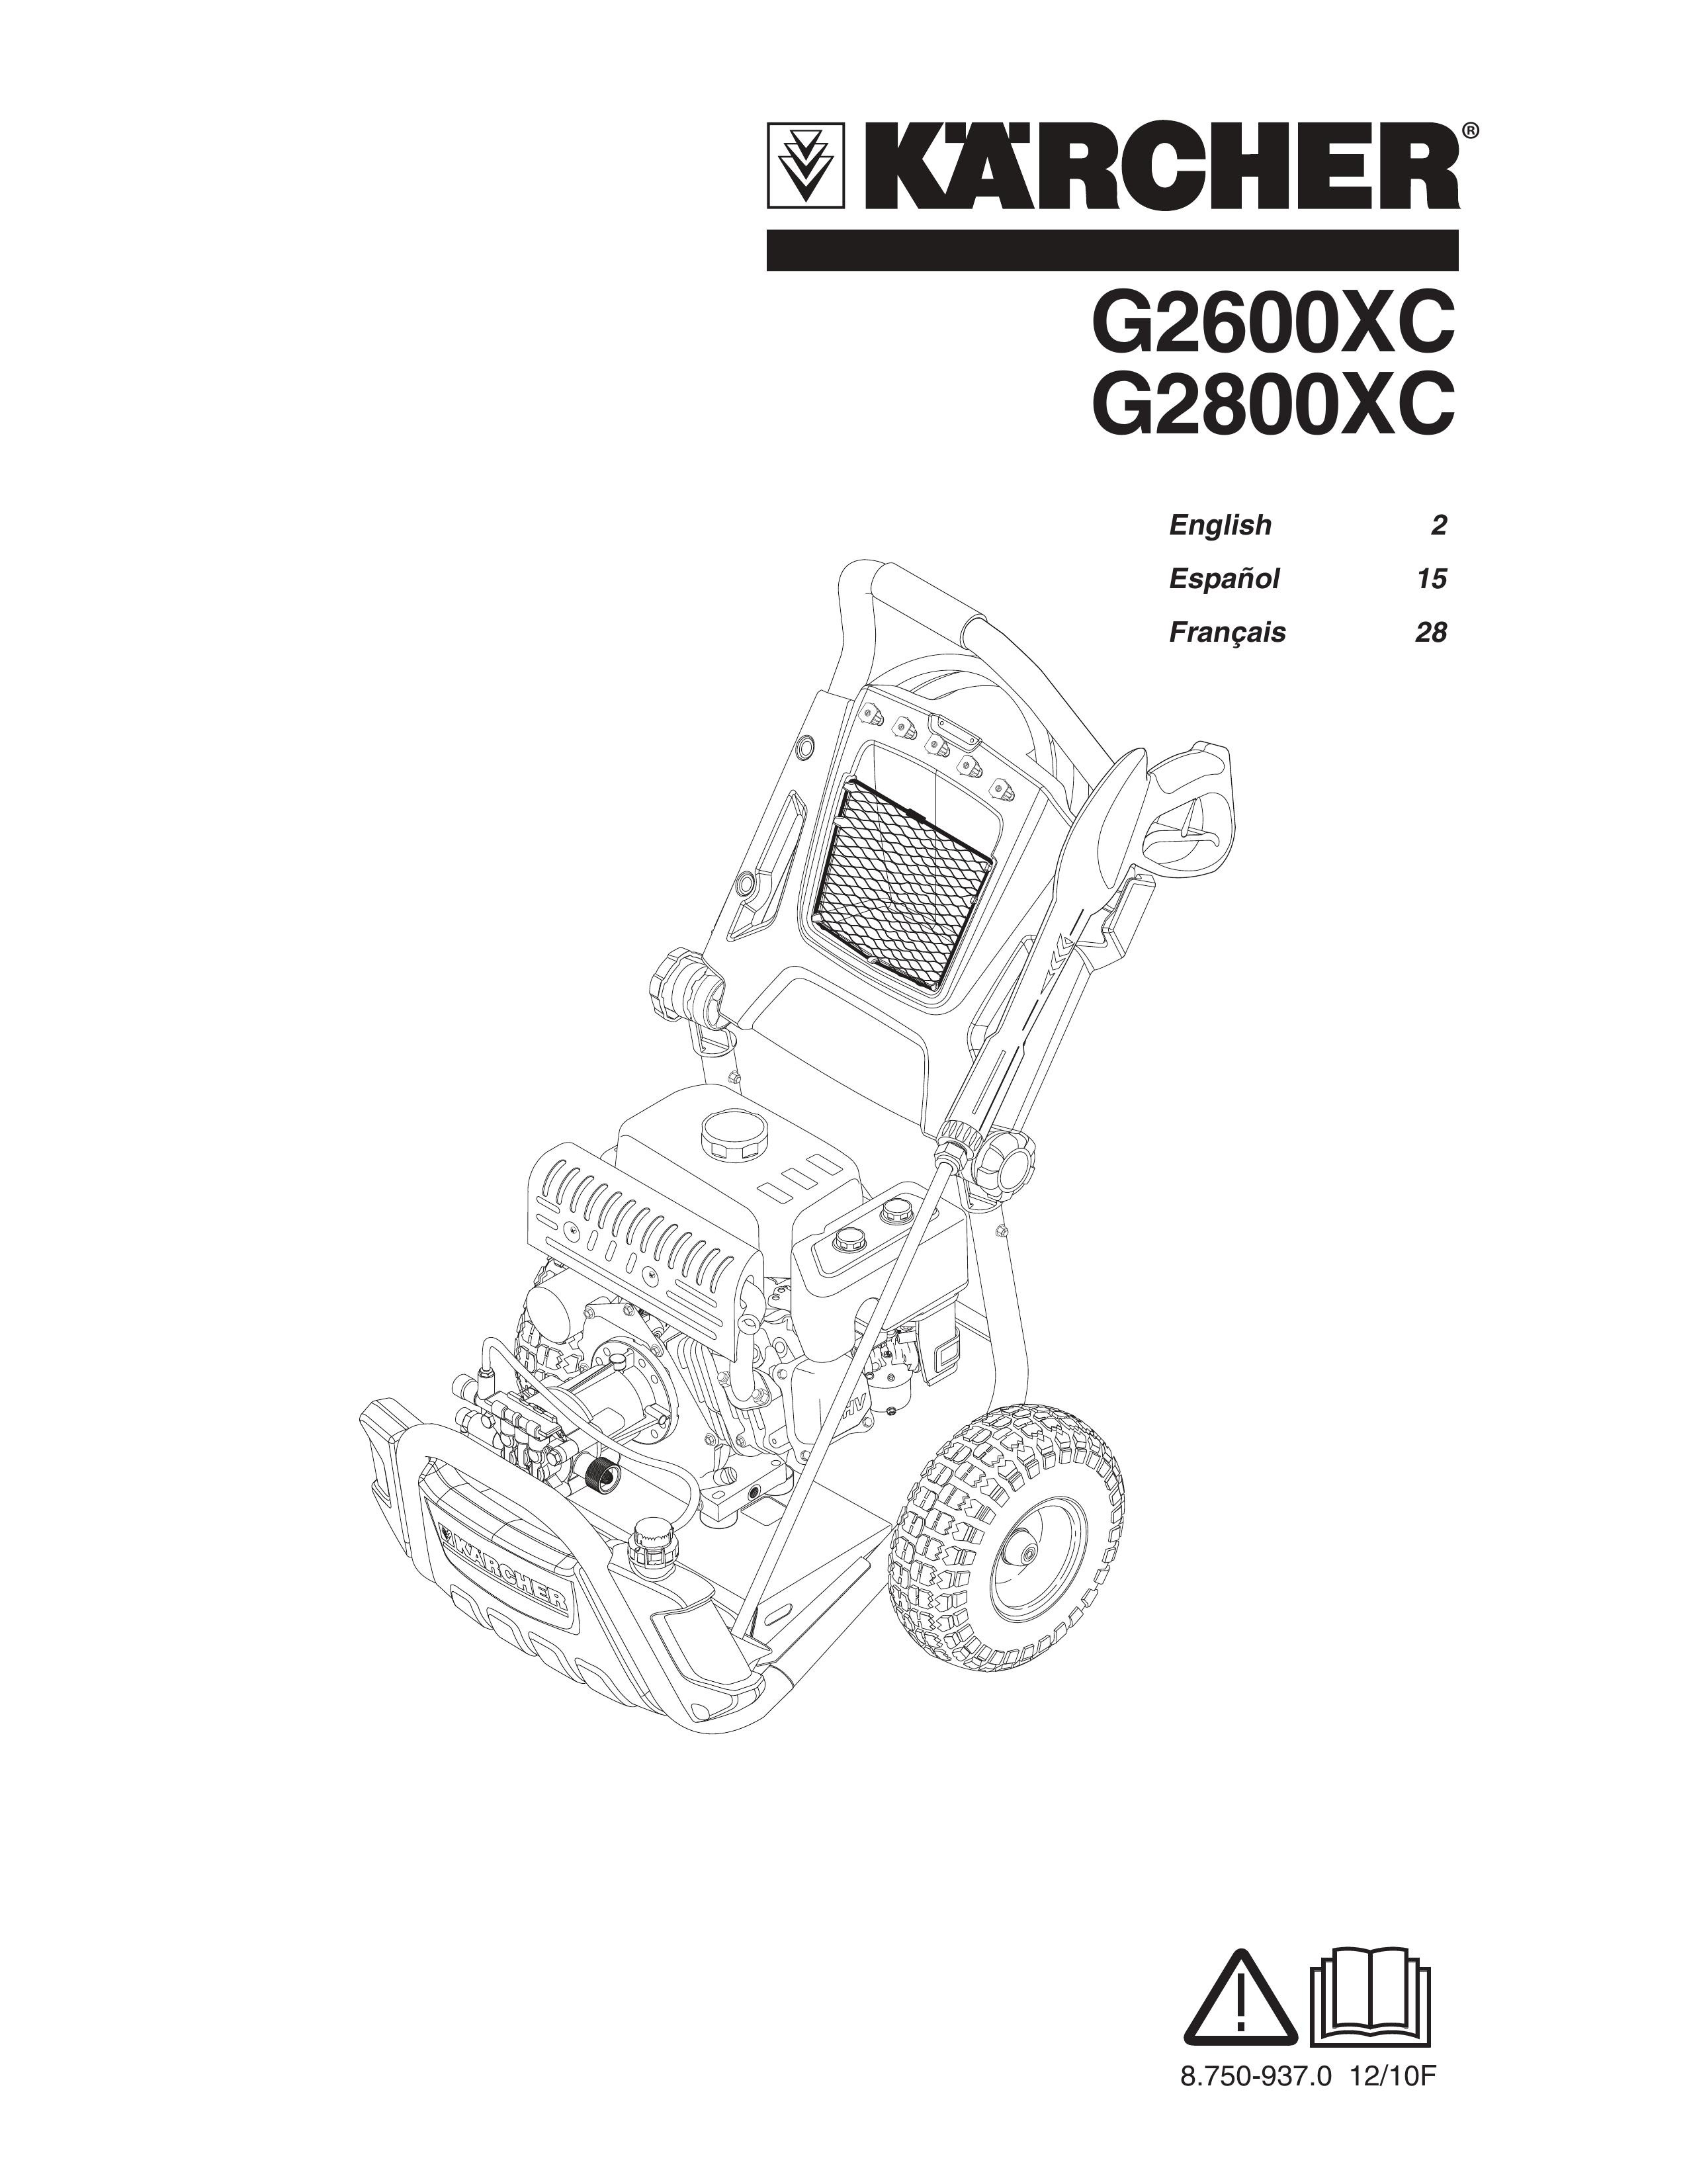 Karcher G2800XC Pressure Washer User Manual